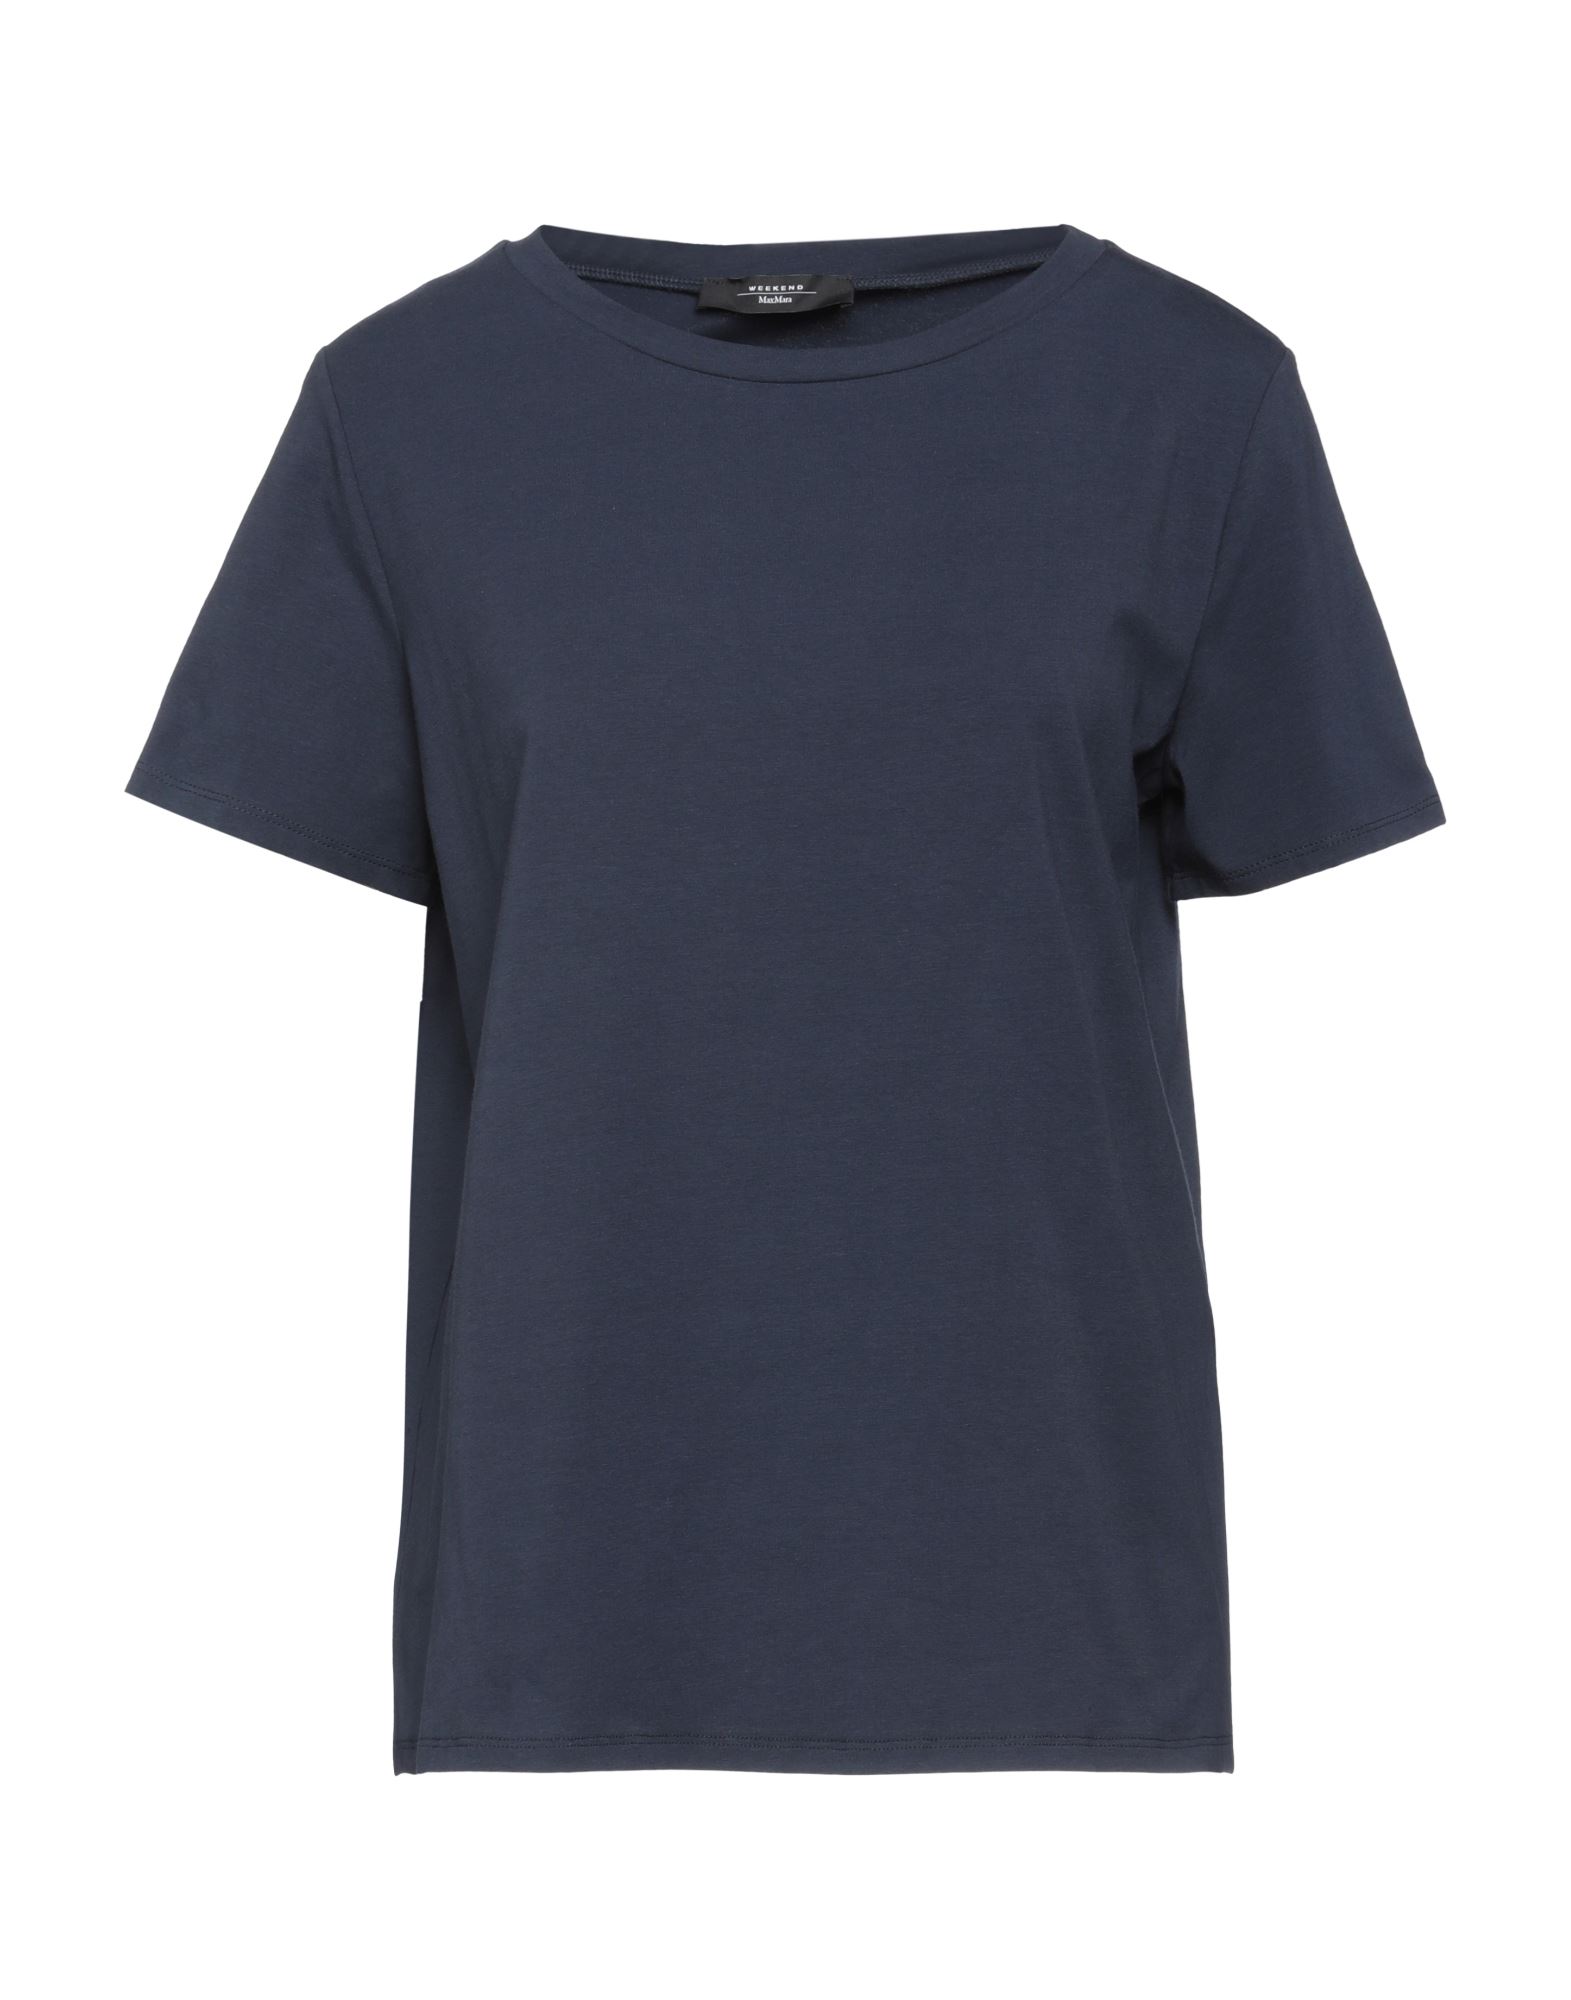 Weekend Max Mara T-shirts In Navy Blue